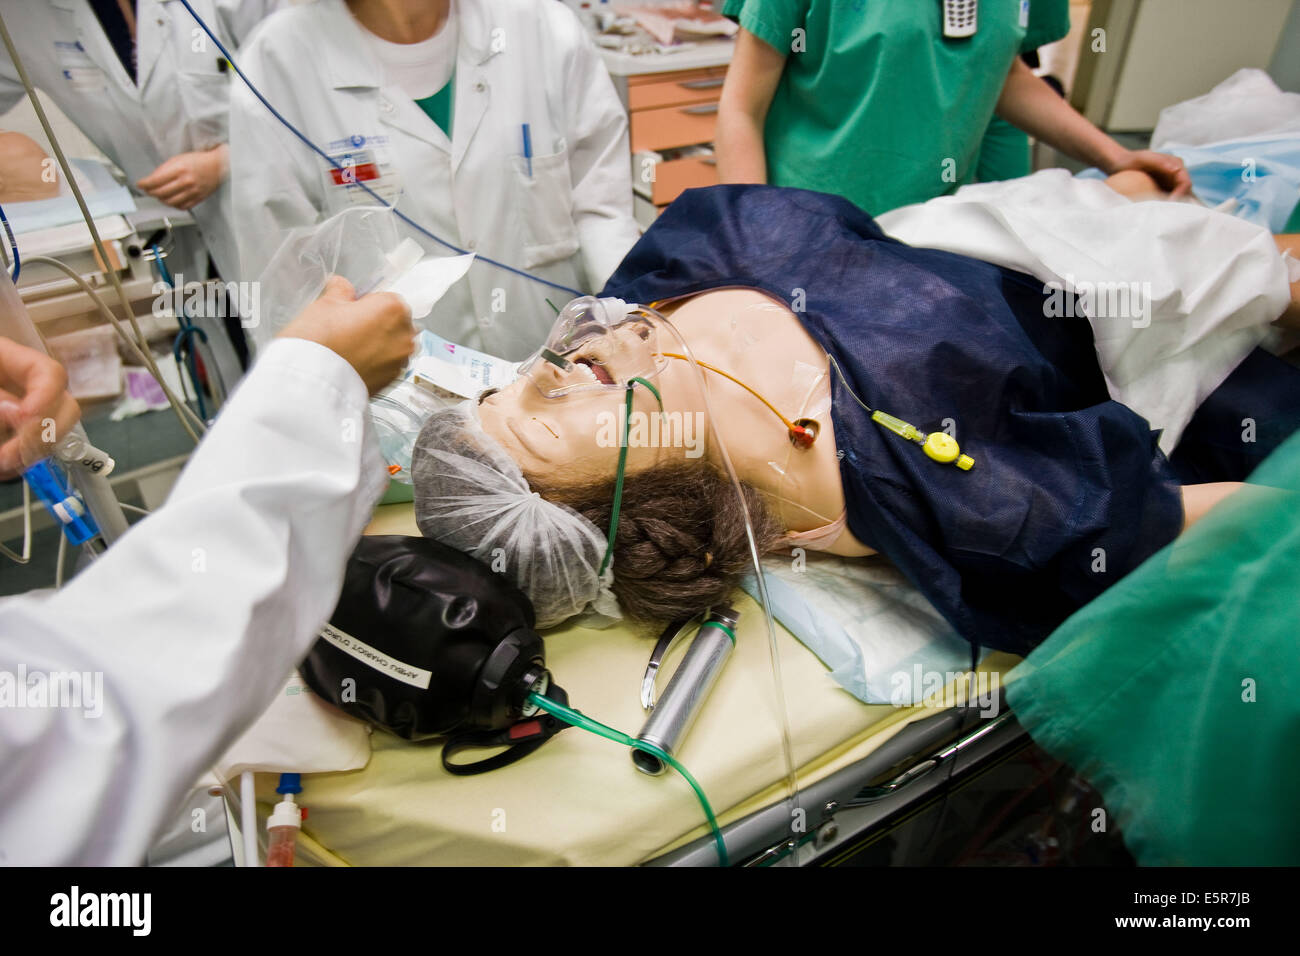 https://c8.alamy.com/comp/E5R7JB/medical-training-patient-simulator-pregnant-woman-emergency-cochin-E5R7JB.jpg